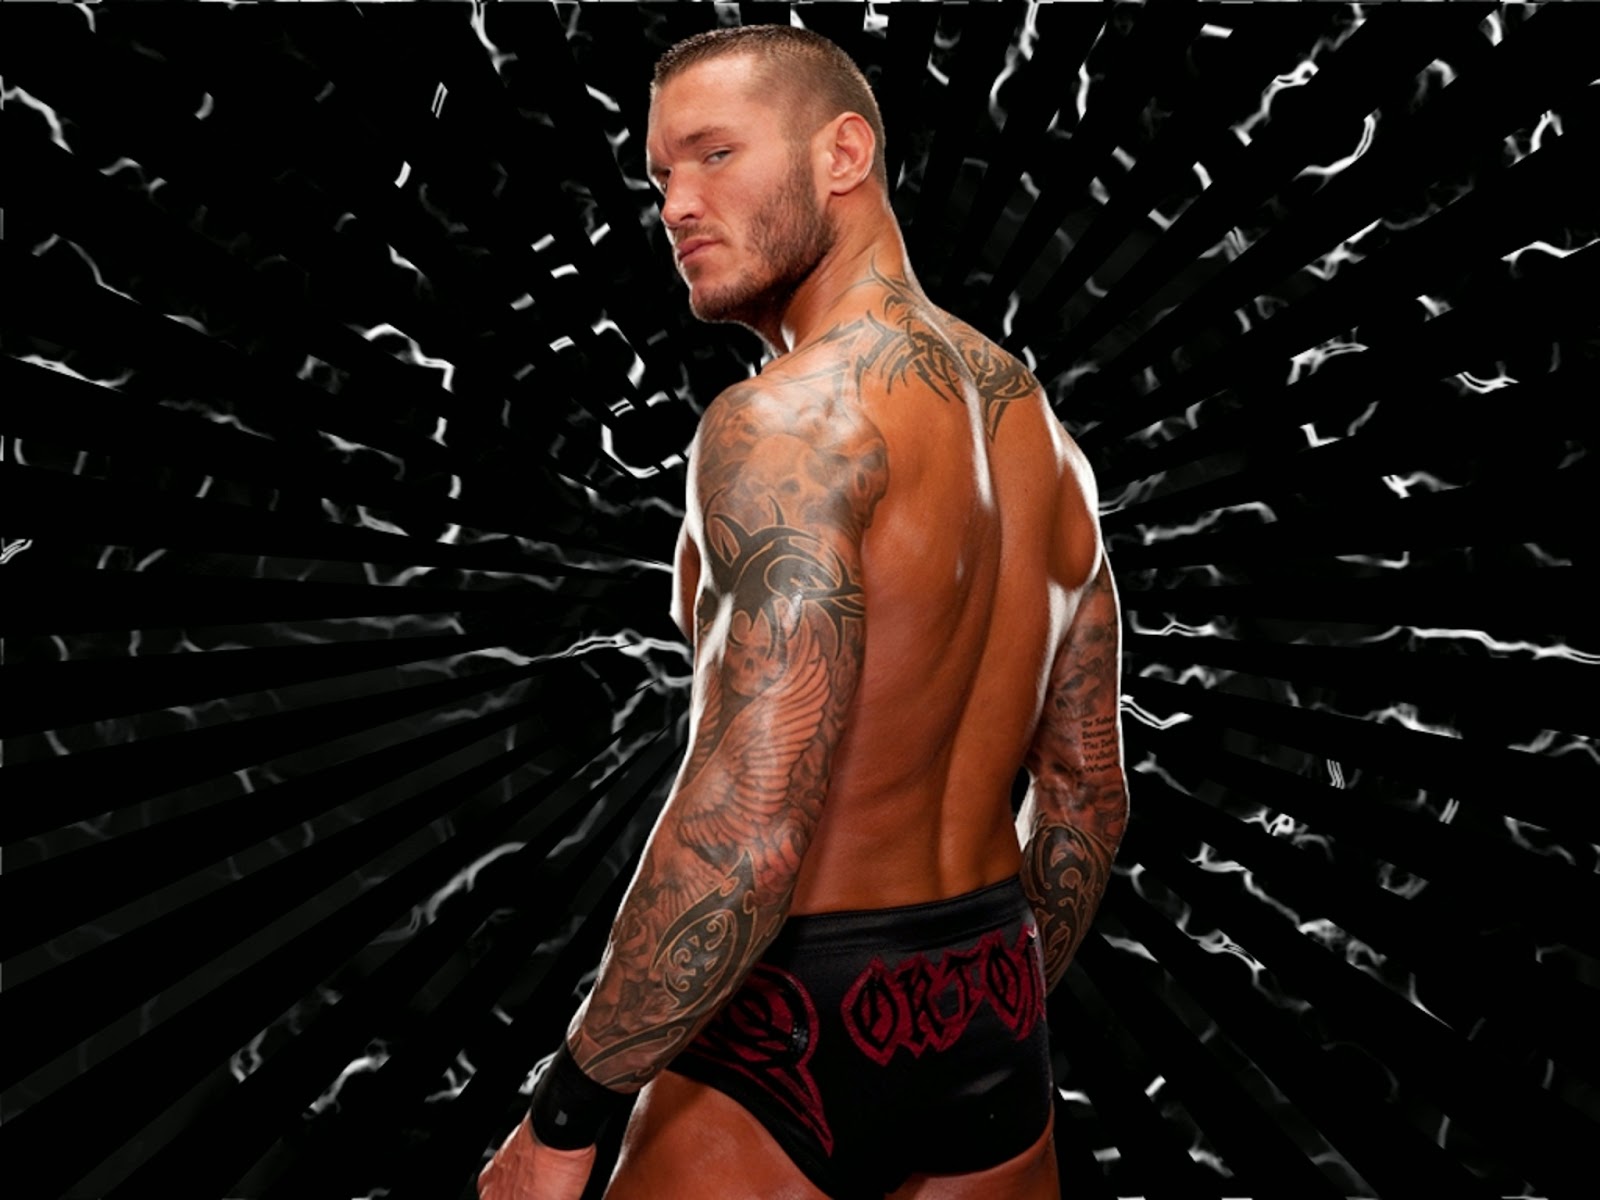 Wwe Randy Orton Wallpapers Group - Randy Orton Image Download - 1600x1200  Wallpaper 